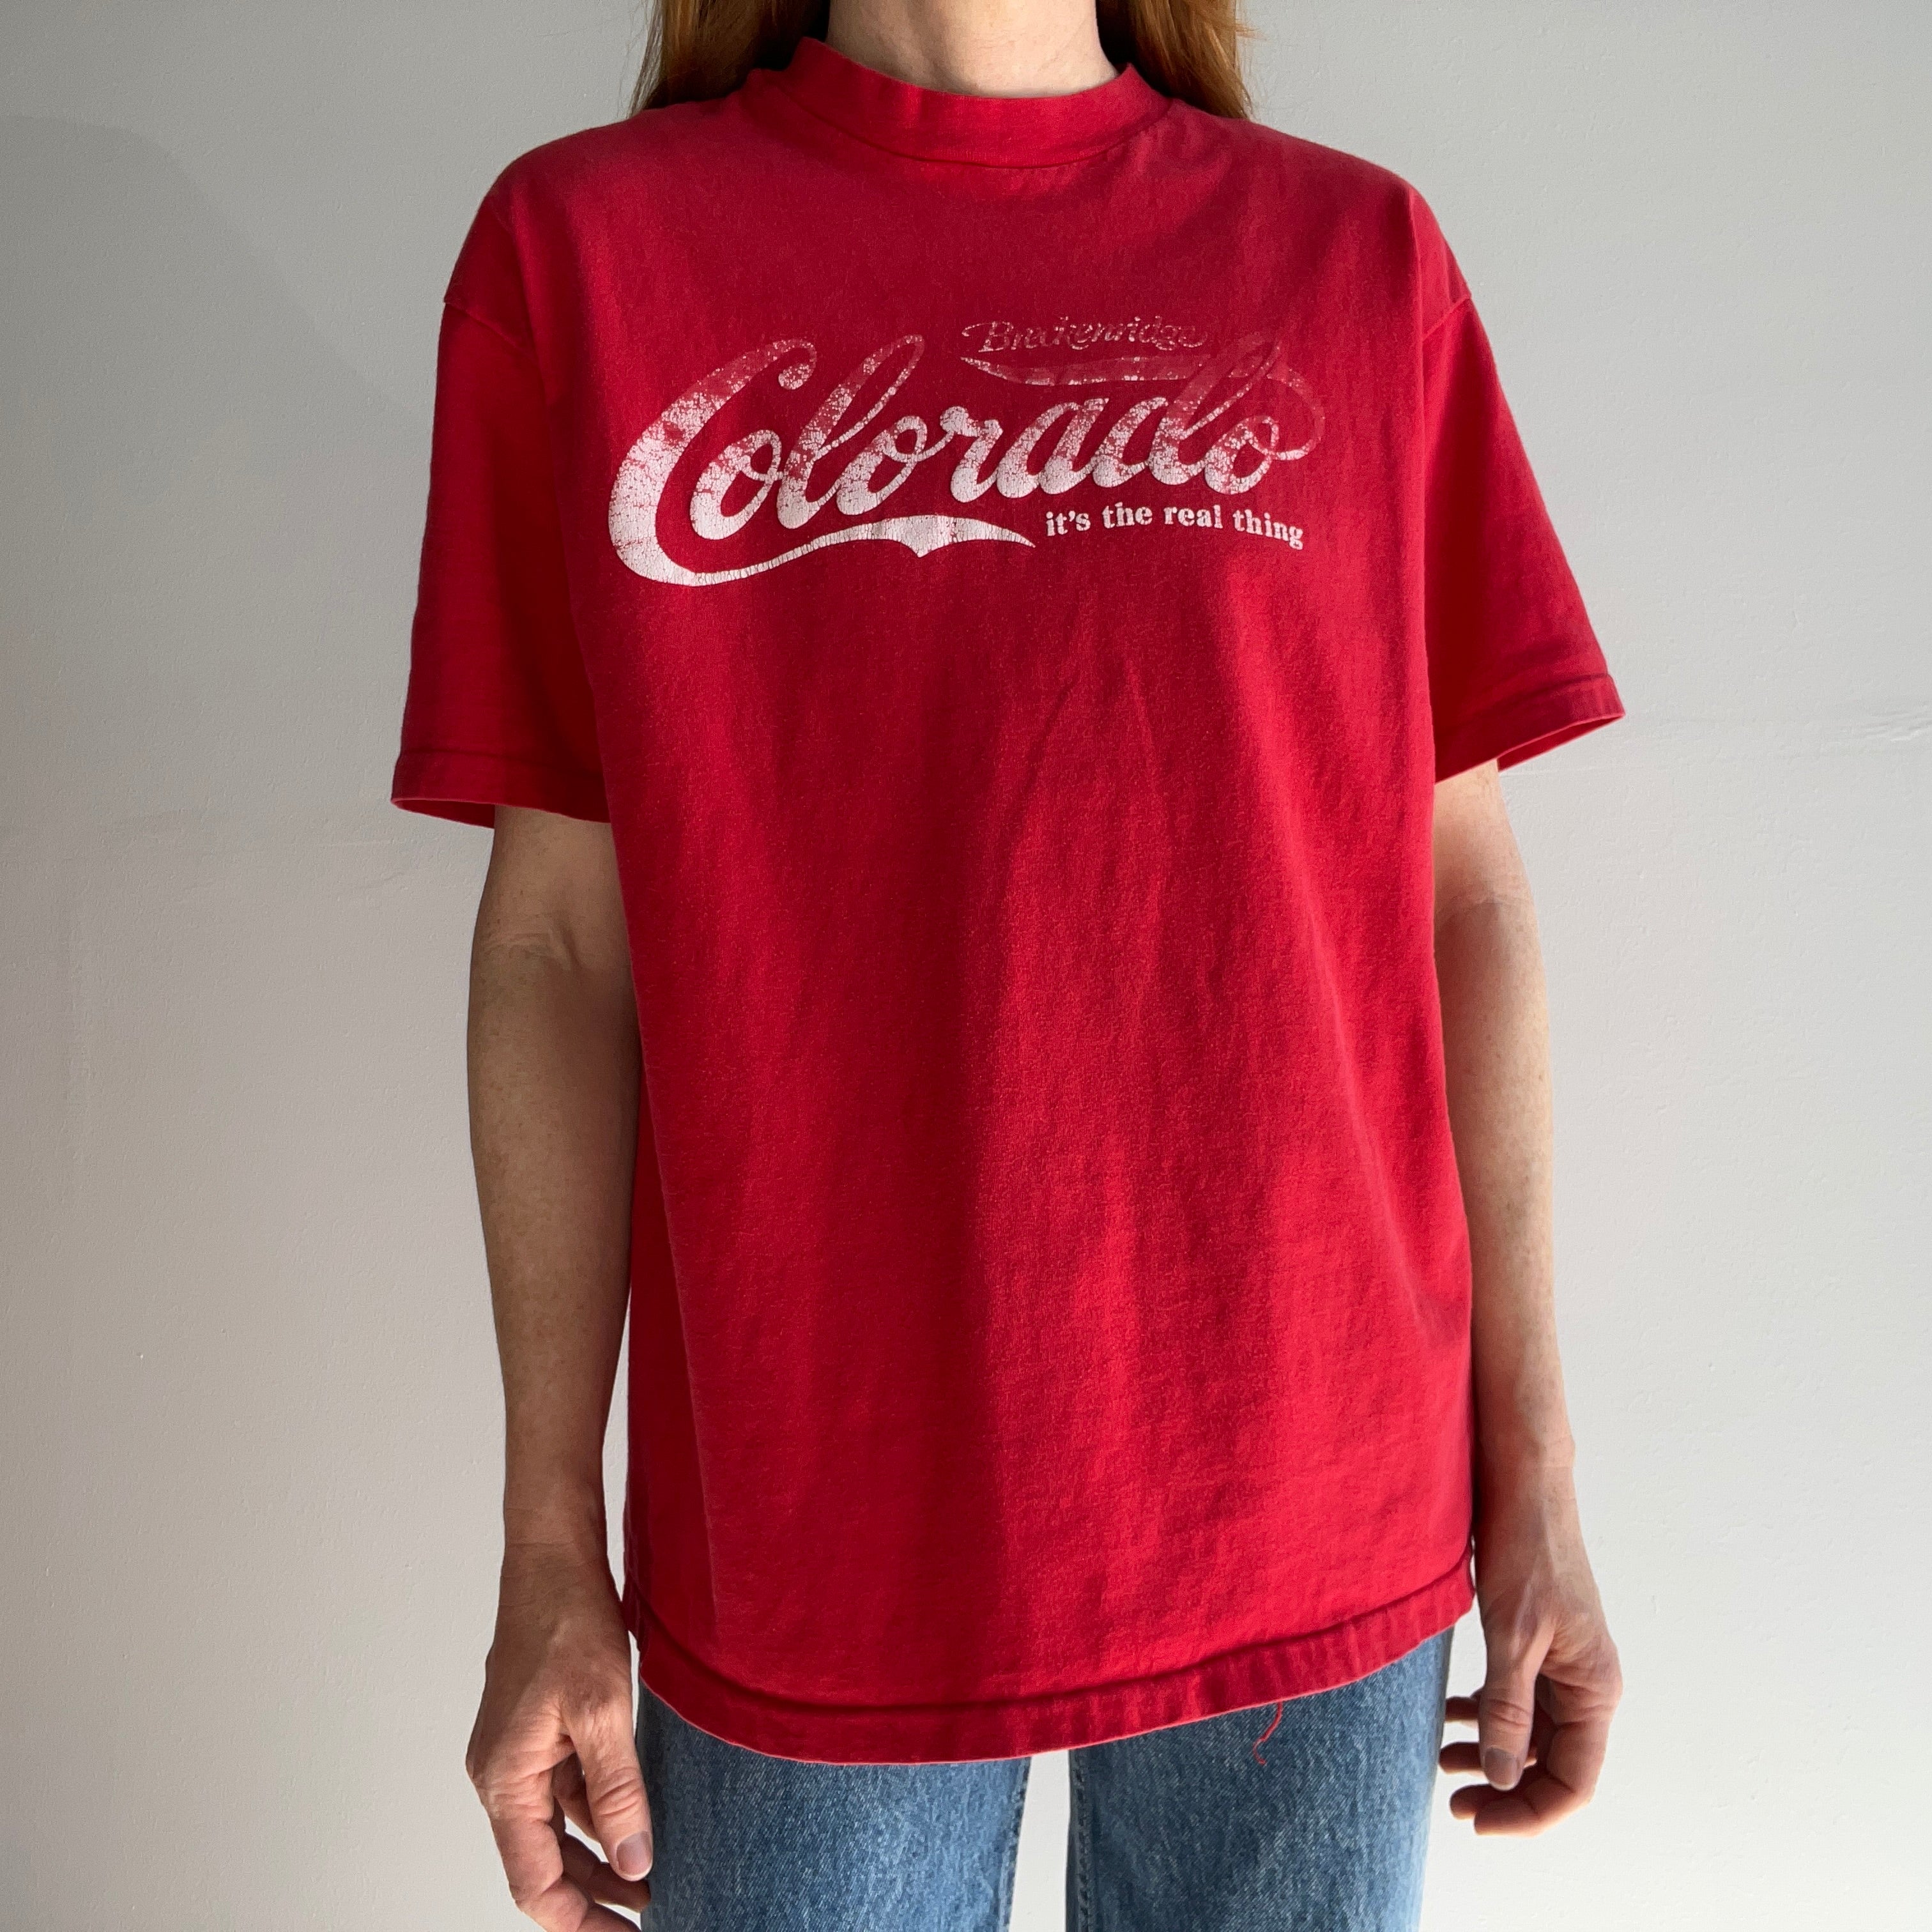 1980/90s Breckenridge Colorado T-shirt - YES!